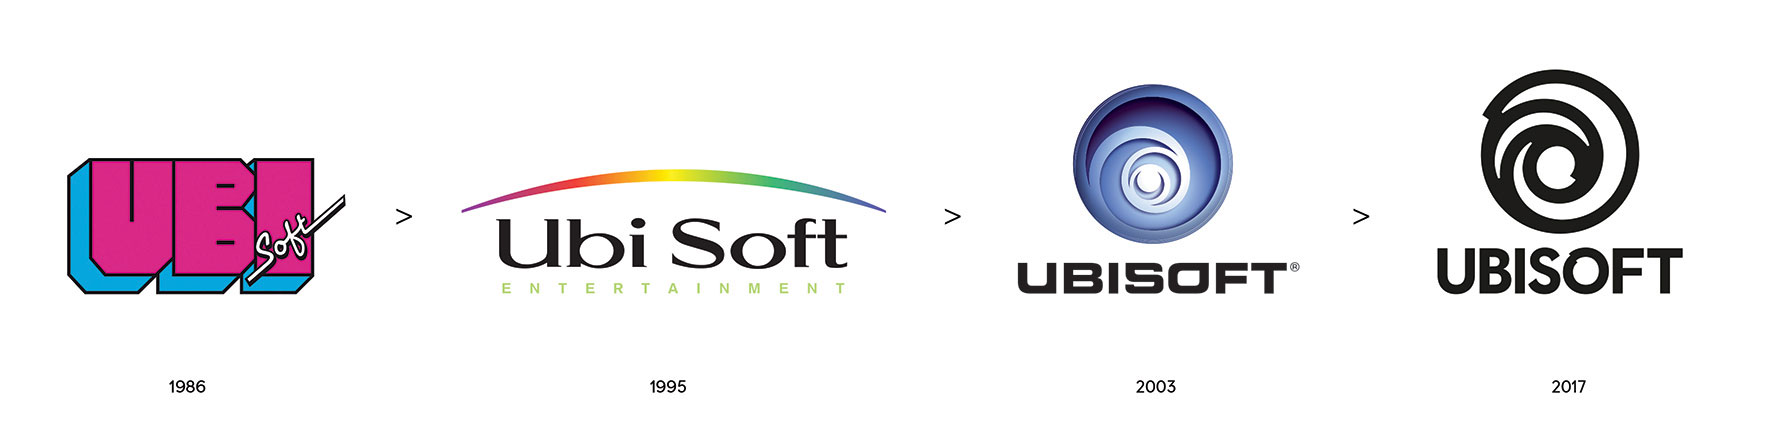 Ubisoft - Logo Evolution